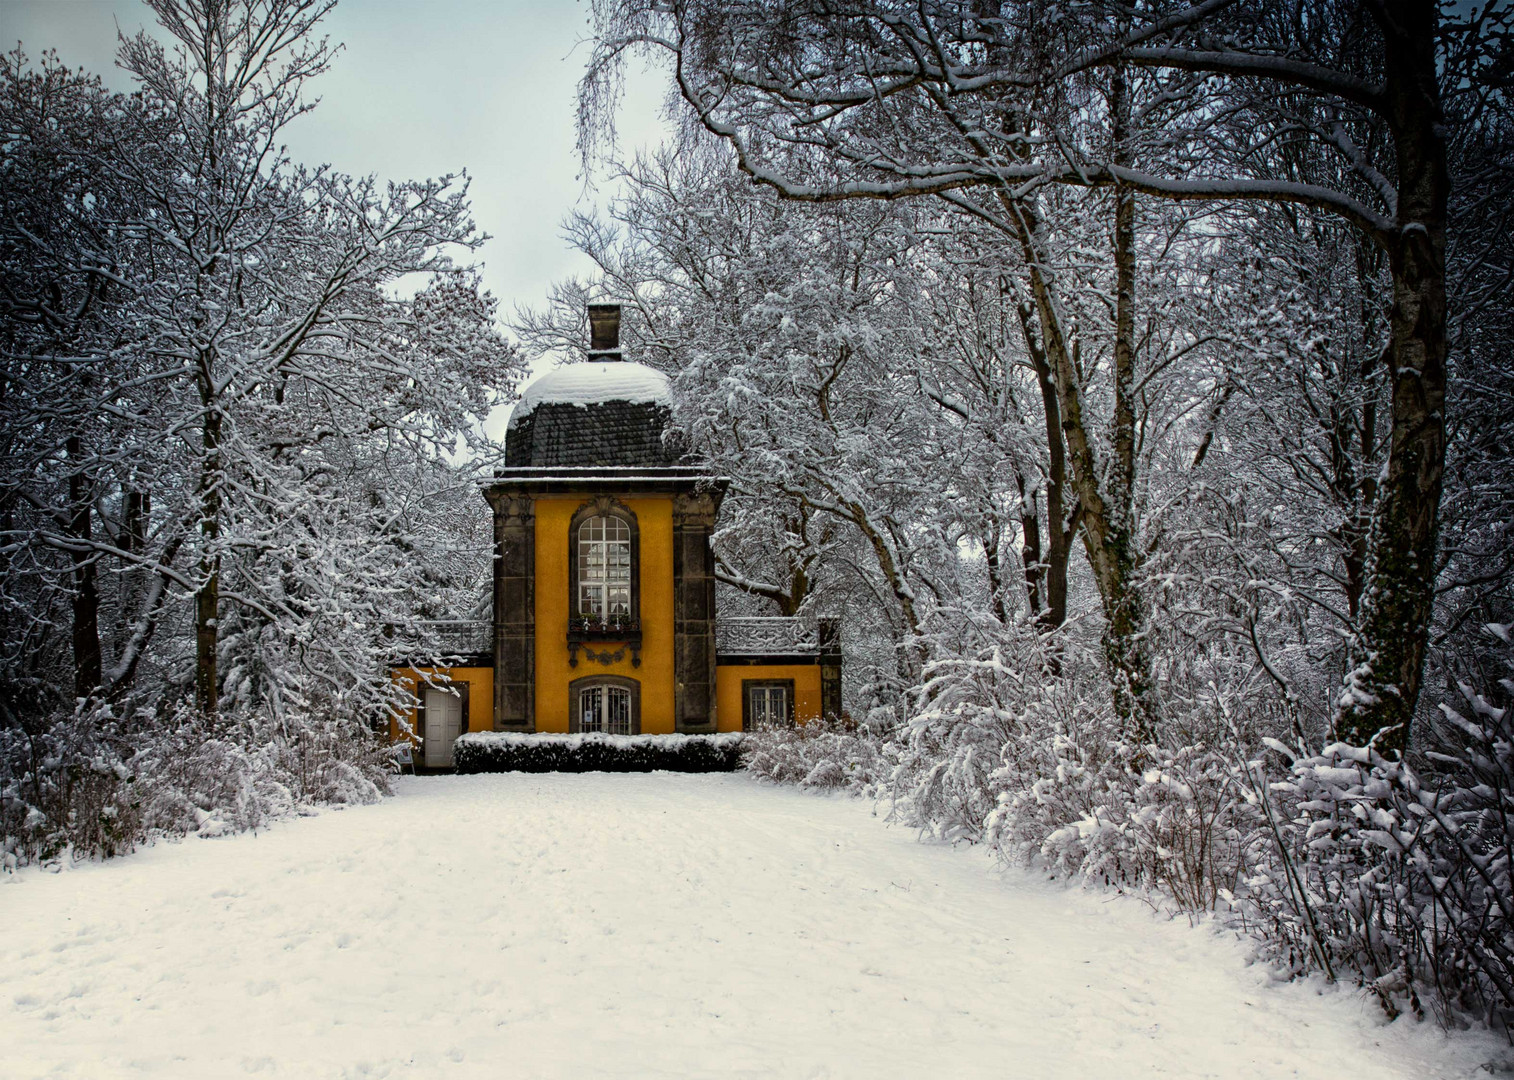 Wintertraum auf dem Lindener Berg in Hannover